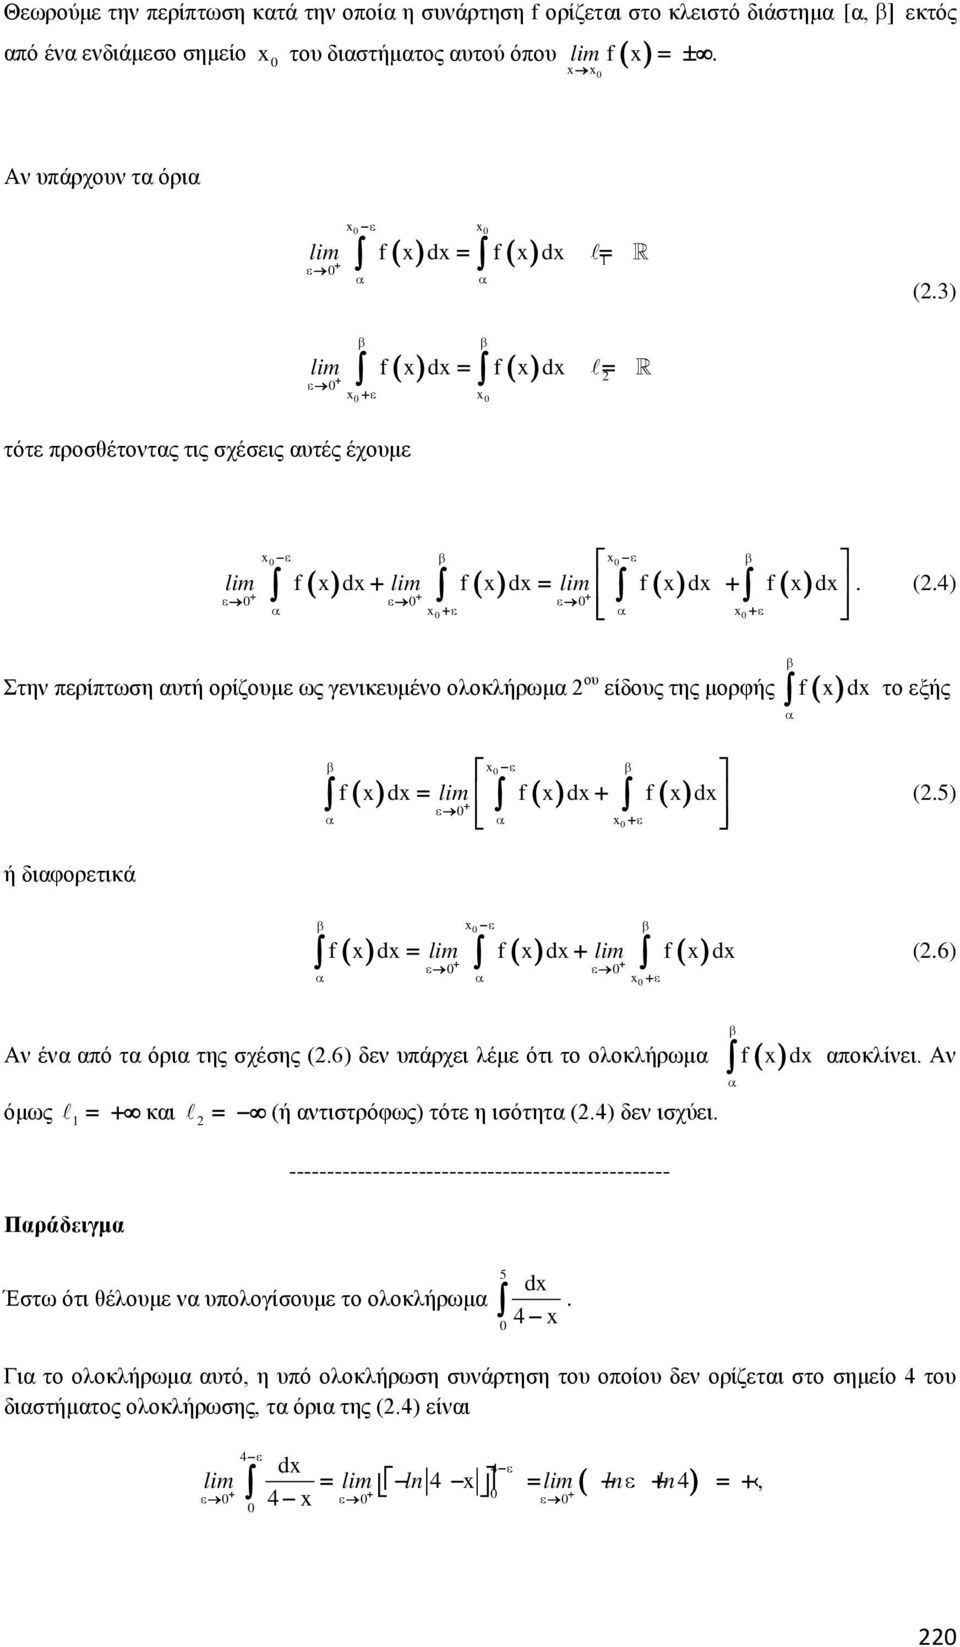 ) d f ( ) d = = ε 0 (.3) τότε προσθέτοντς τις σχέσεις υτές έχουμε lim f ( ) d f ( ) d 0 = = ε 0 ε 0 0 ε 0 ε lim f ( ) d lim f ( ) d = lim f ( ) d f ( ) d. (.4) ε 0 ε 0 ε 0 0 ε 0 ε Στην περίπτωση υτή ορίζουμε ως γενικευμένο ολοκλήρωμ ου είδους της μορφής ( ) ή διφορετικά 0 ε f ( ) d = lim f ( ) d f ( ) d ε 0 0 ε f d το εξής (.